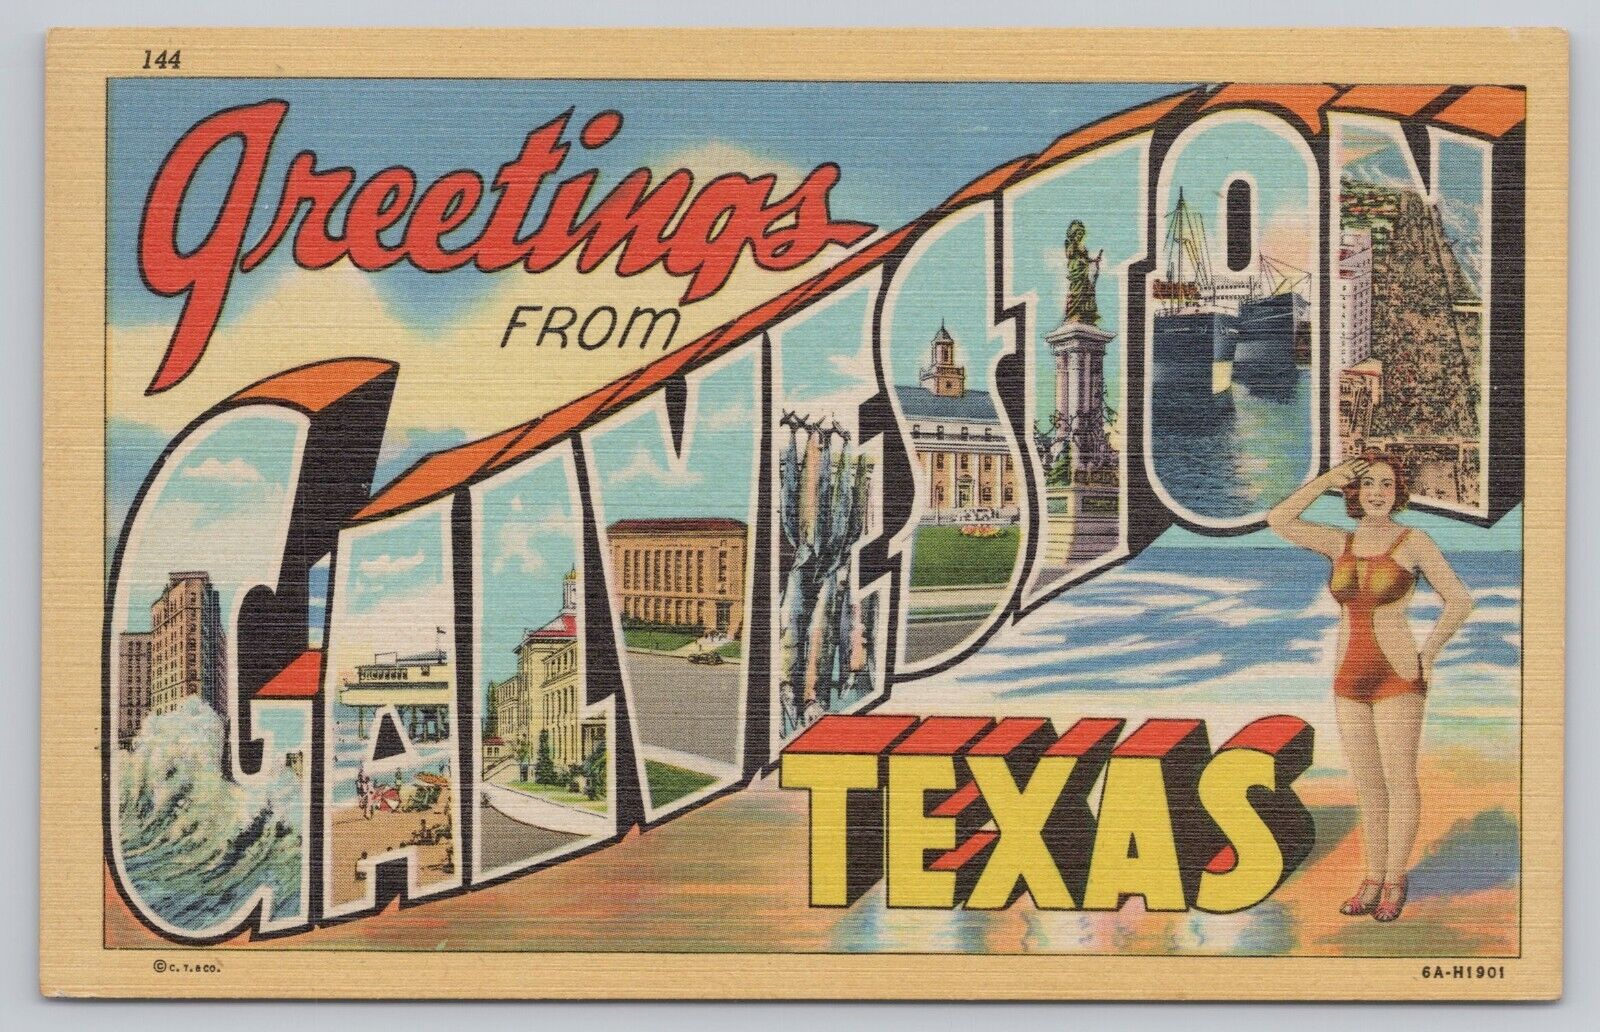 Galveston Texas, Large Letter Greetings, Girl Swimsuit Beach, Vintage Postcard